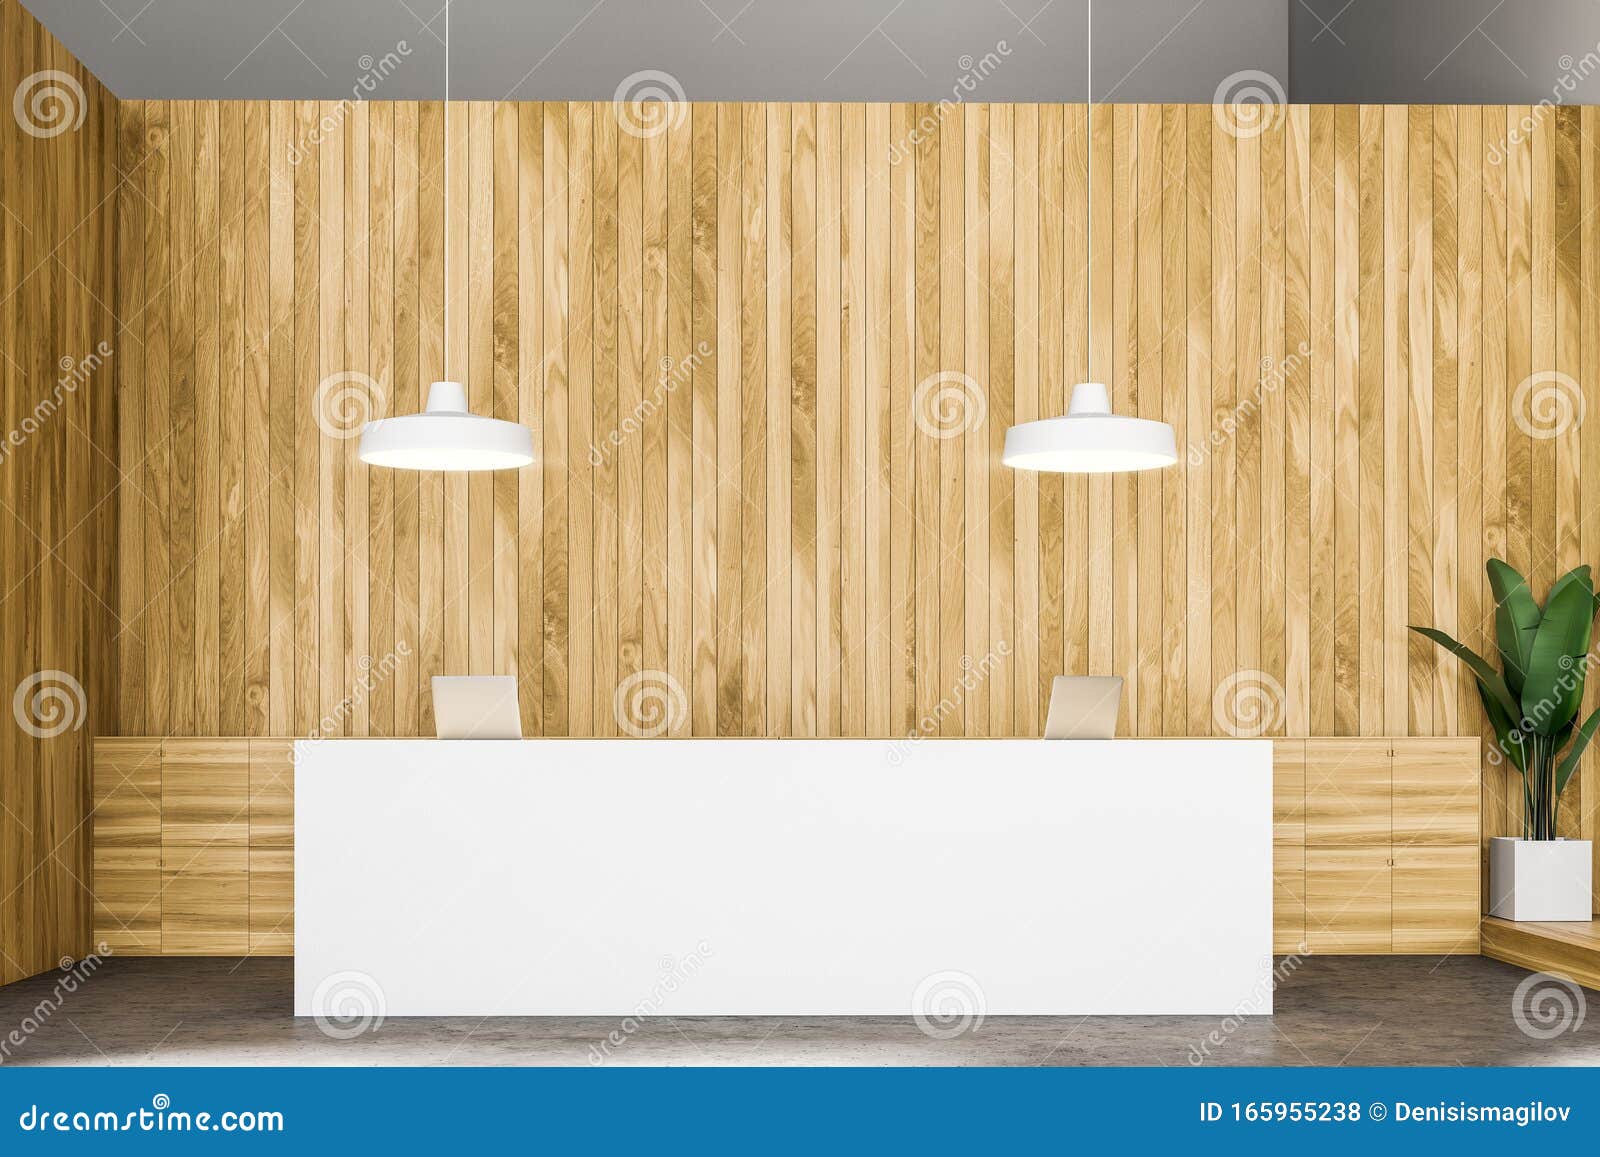 White Reception Desk In Wooden Office Stock Illustration